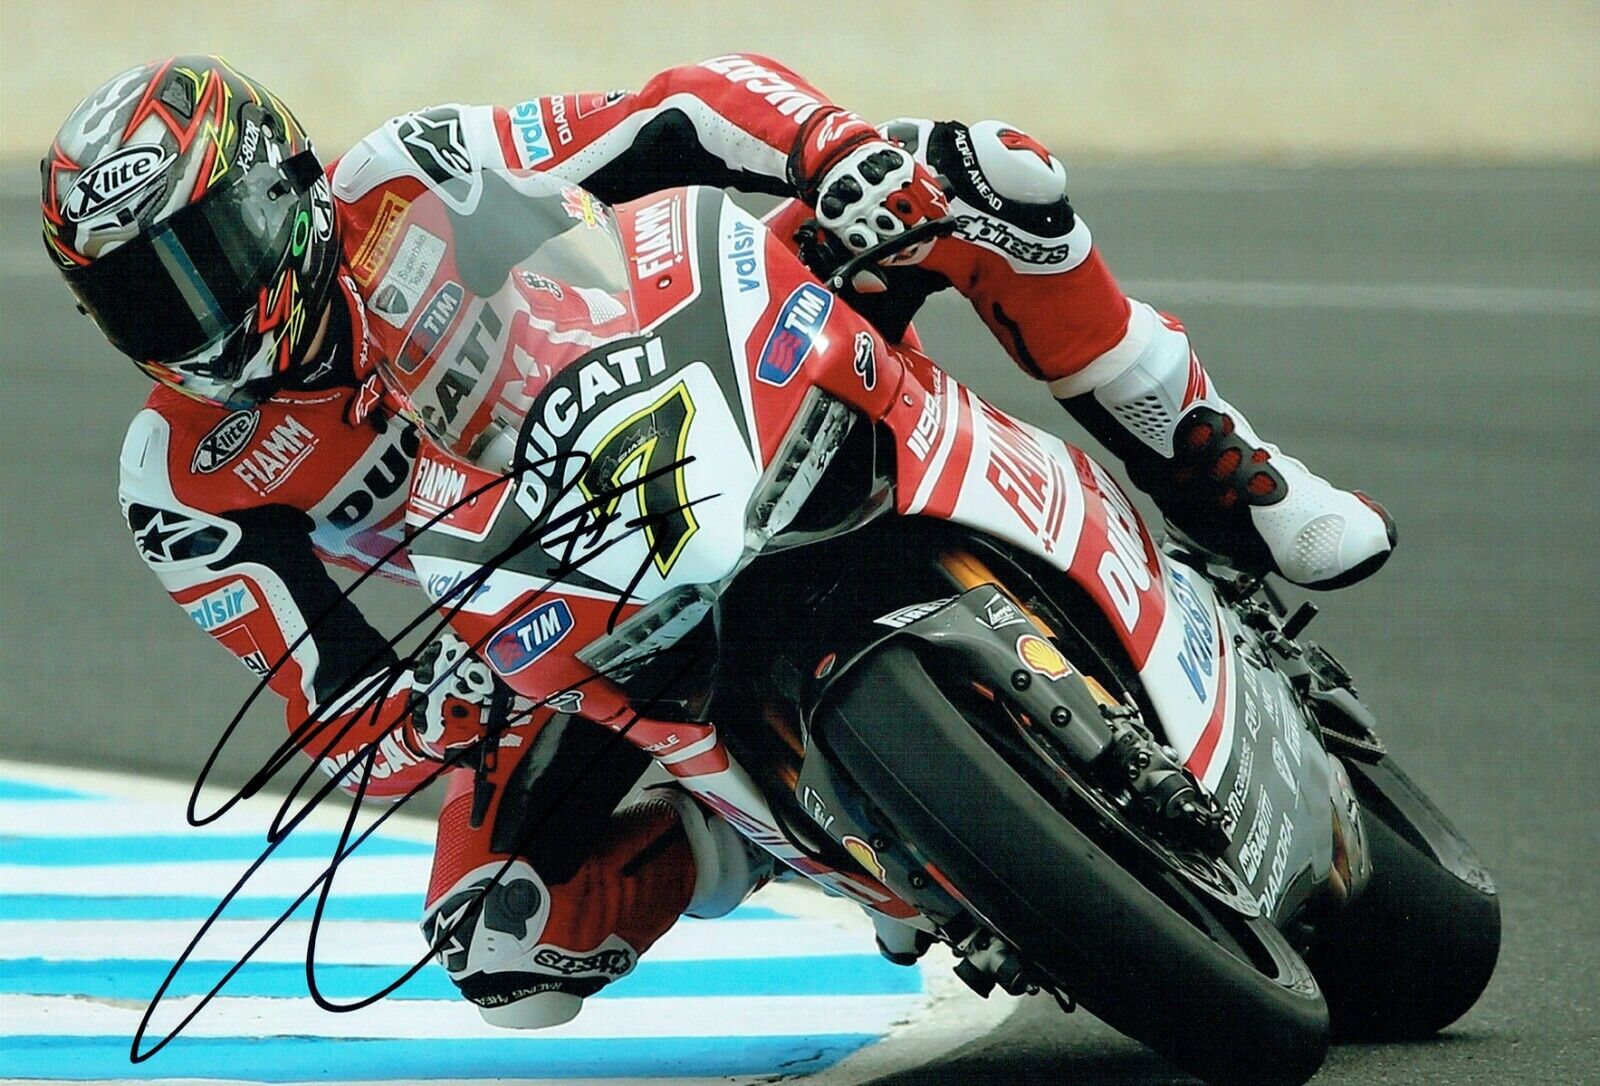 Chaz DAVIES SIGNED Autograph 12x8 WSBK Rider Ducati Photo Poster painting AFTAL RD COA